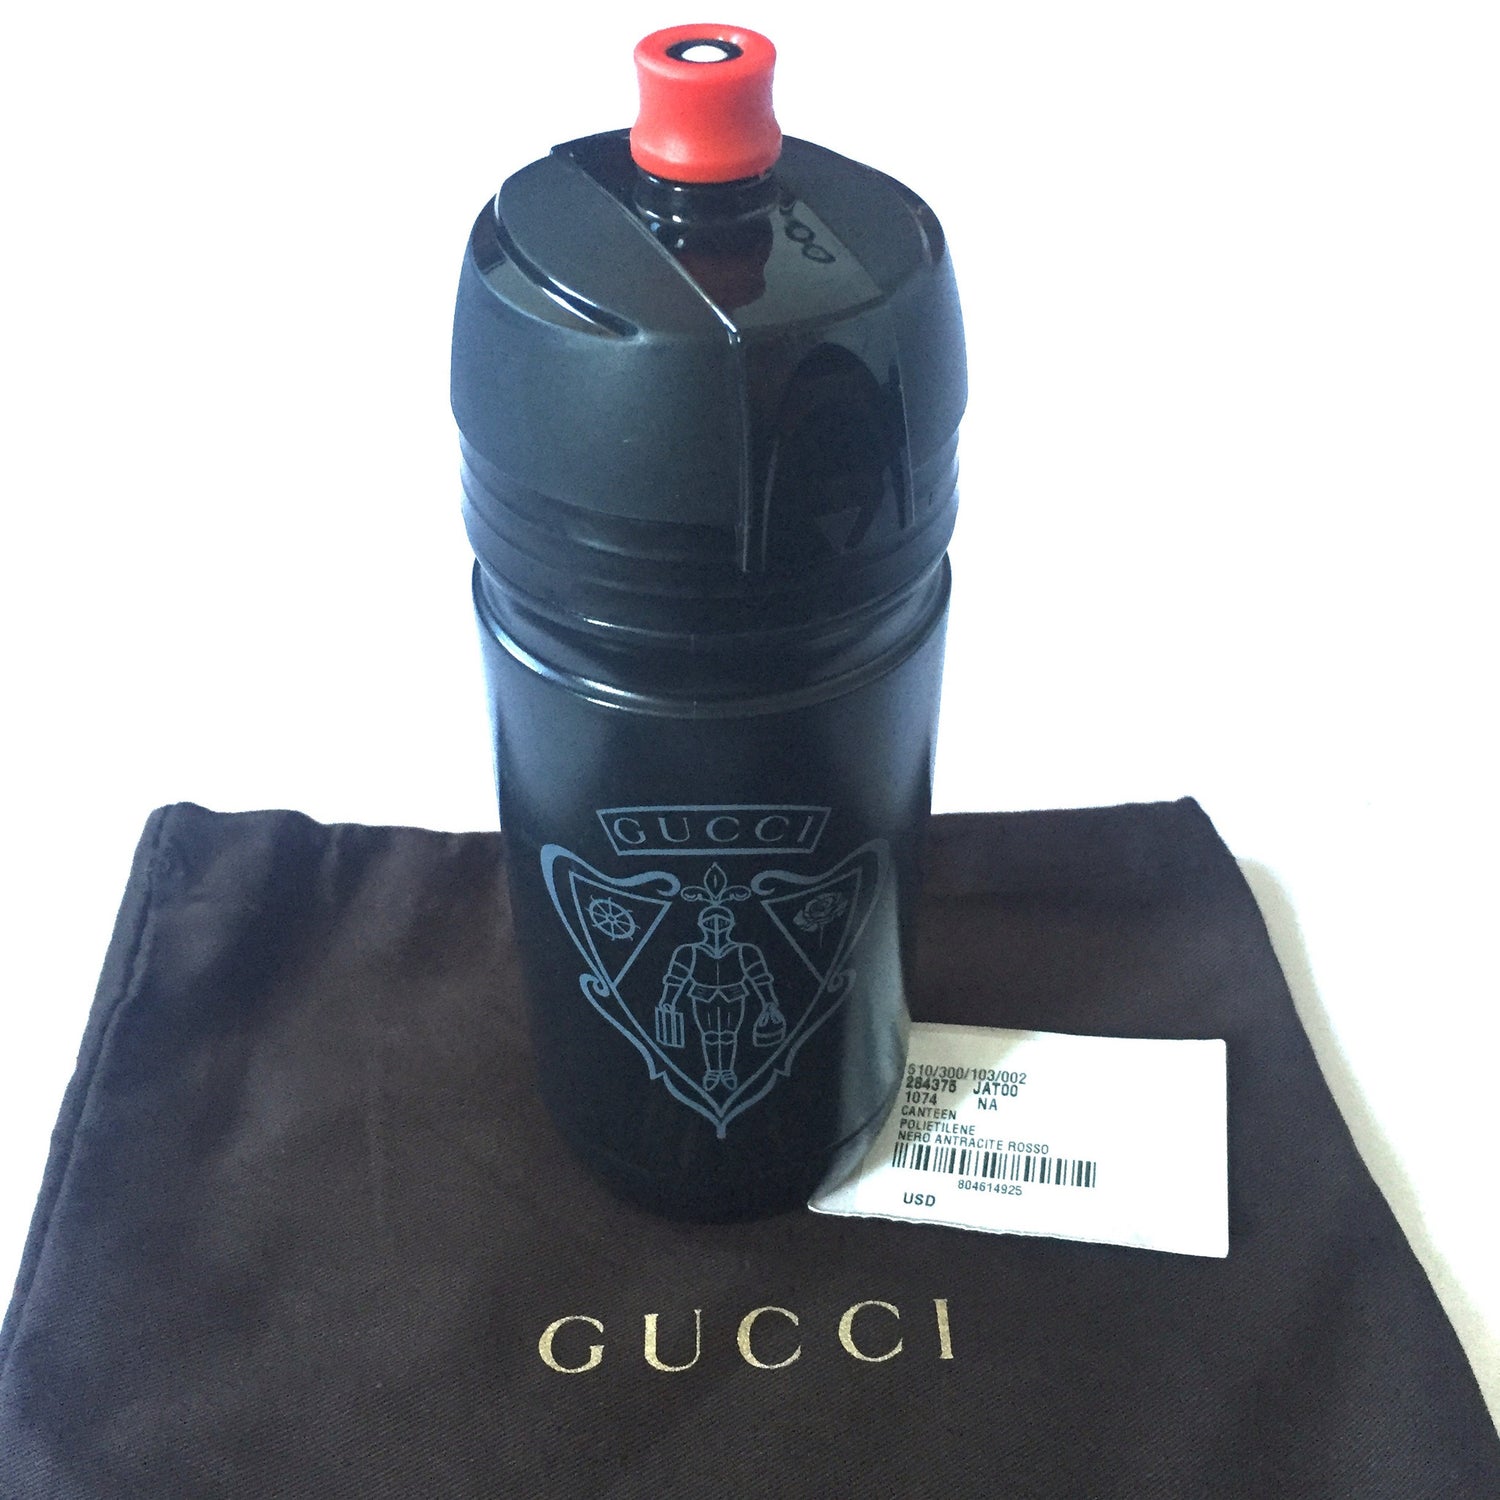 gucci water bottle